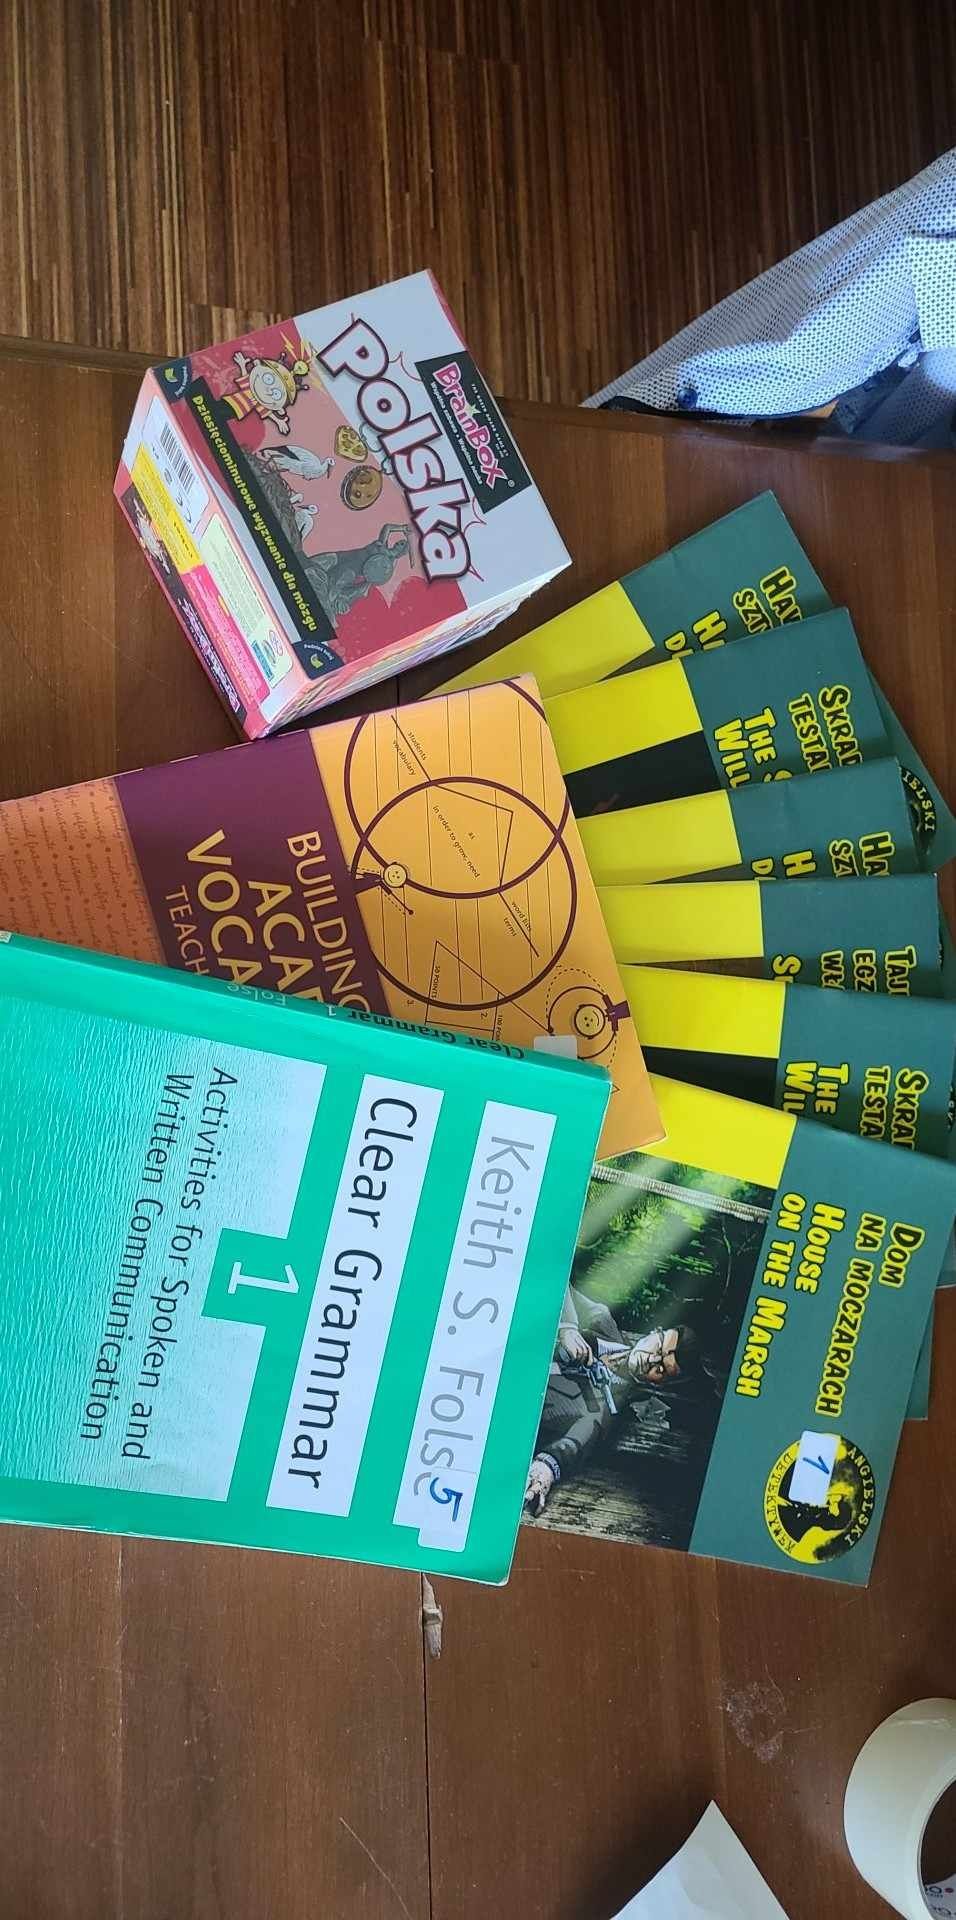 English books and game